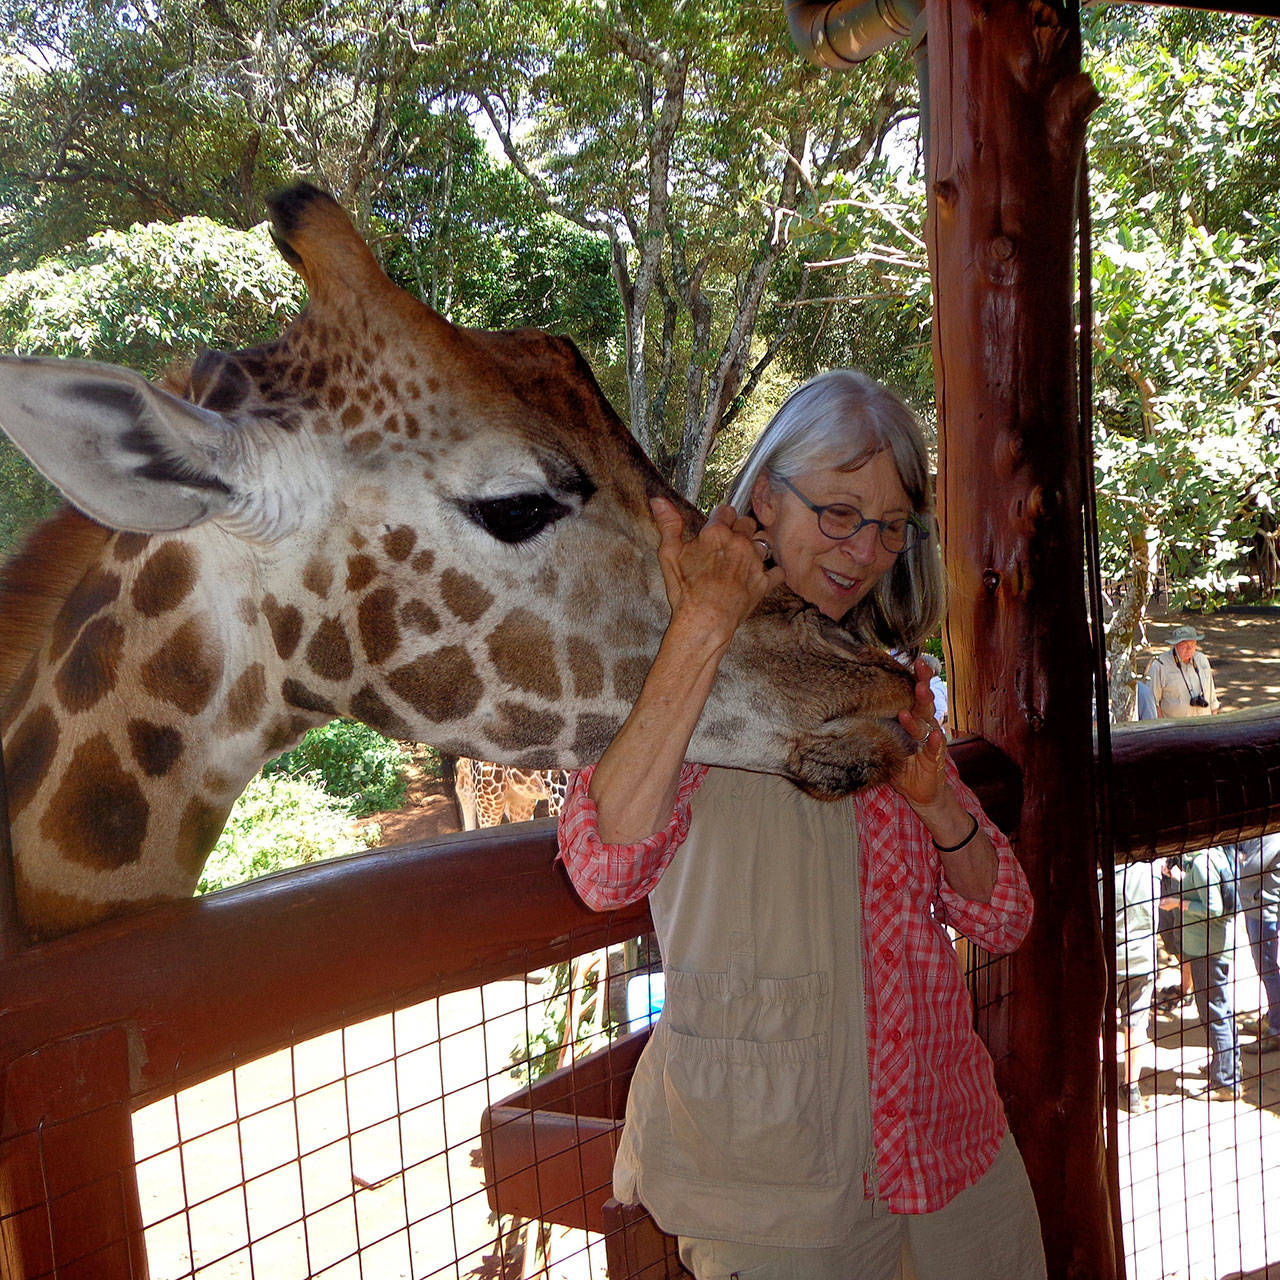 Photograph provided by Connie Lloyd. While on safari in Kenya, Connie Lloyd has an opportunity to hug a giraffe.